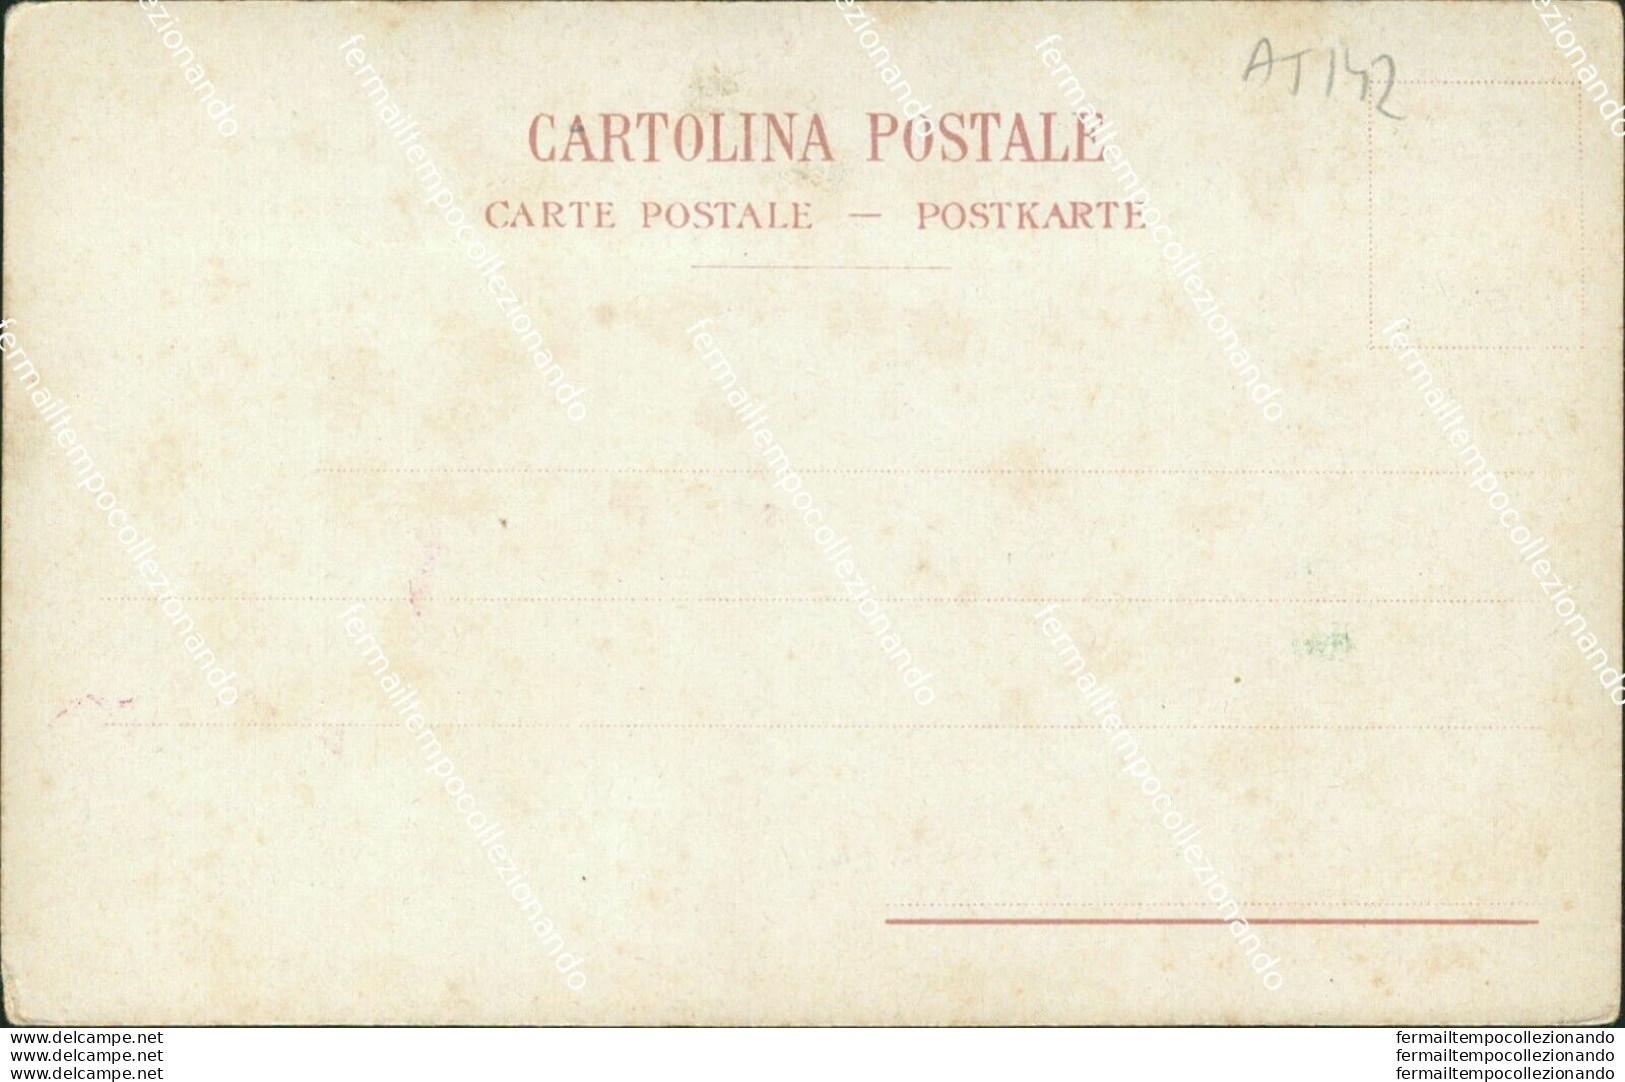 At142 Cartolina Sorrento Monumento A Torquato Tasso Provincia Di Napoli - Napoli (Naples)